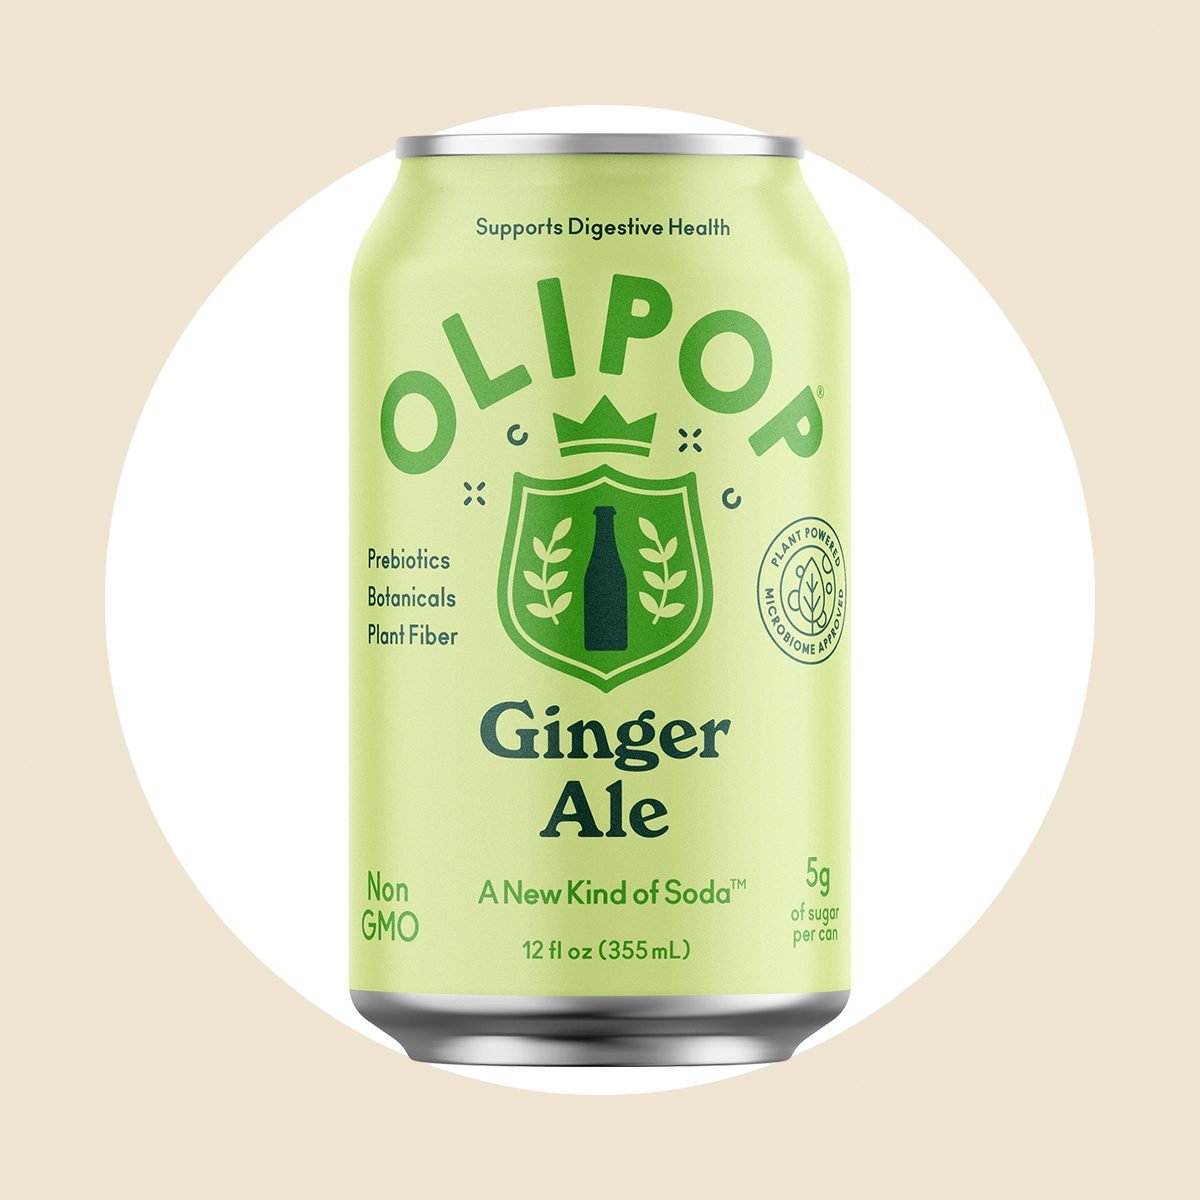 Best Ginger Ale According to Taste Tests